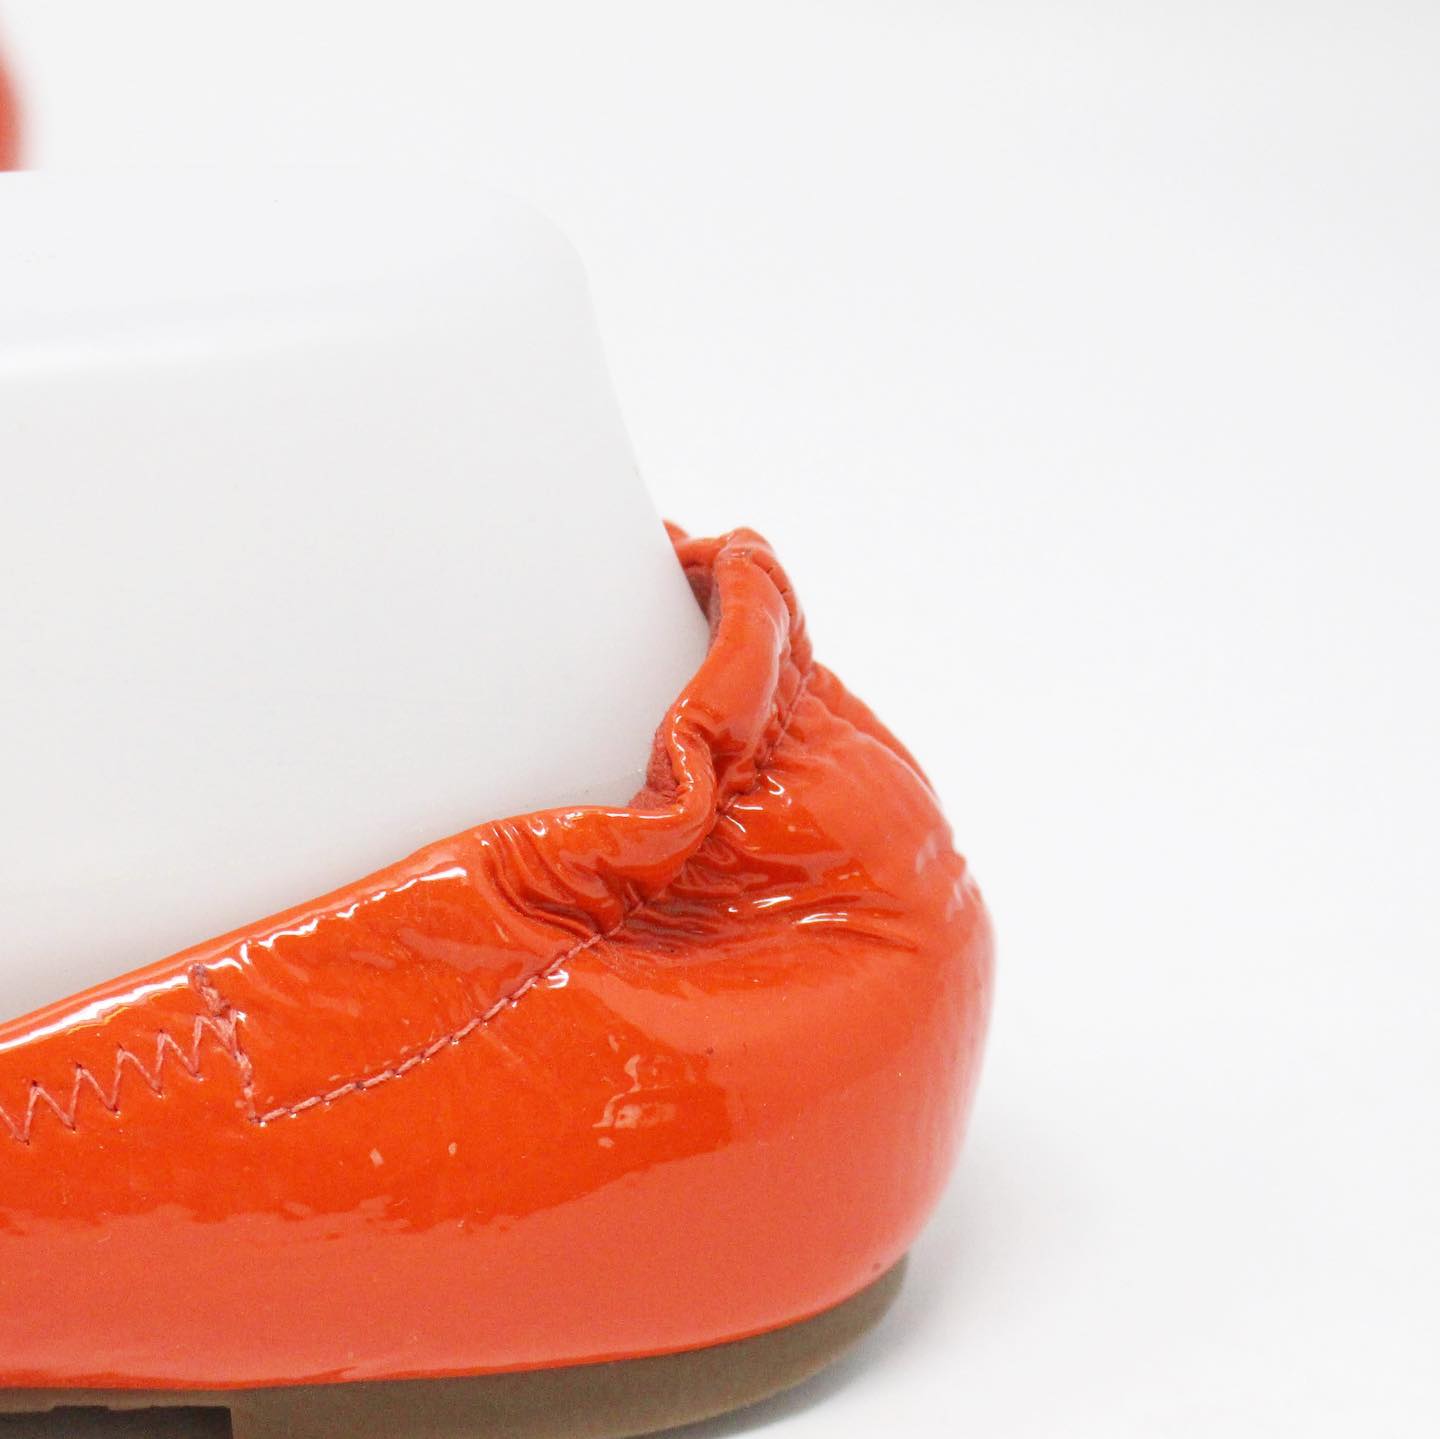 Patent leather sandal Louis Vuitton Orange size 40 EU in Patent